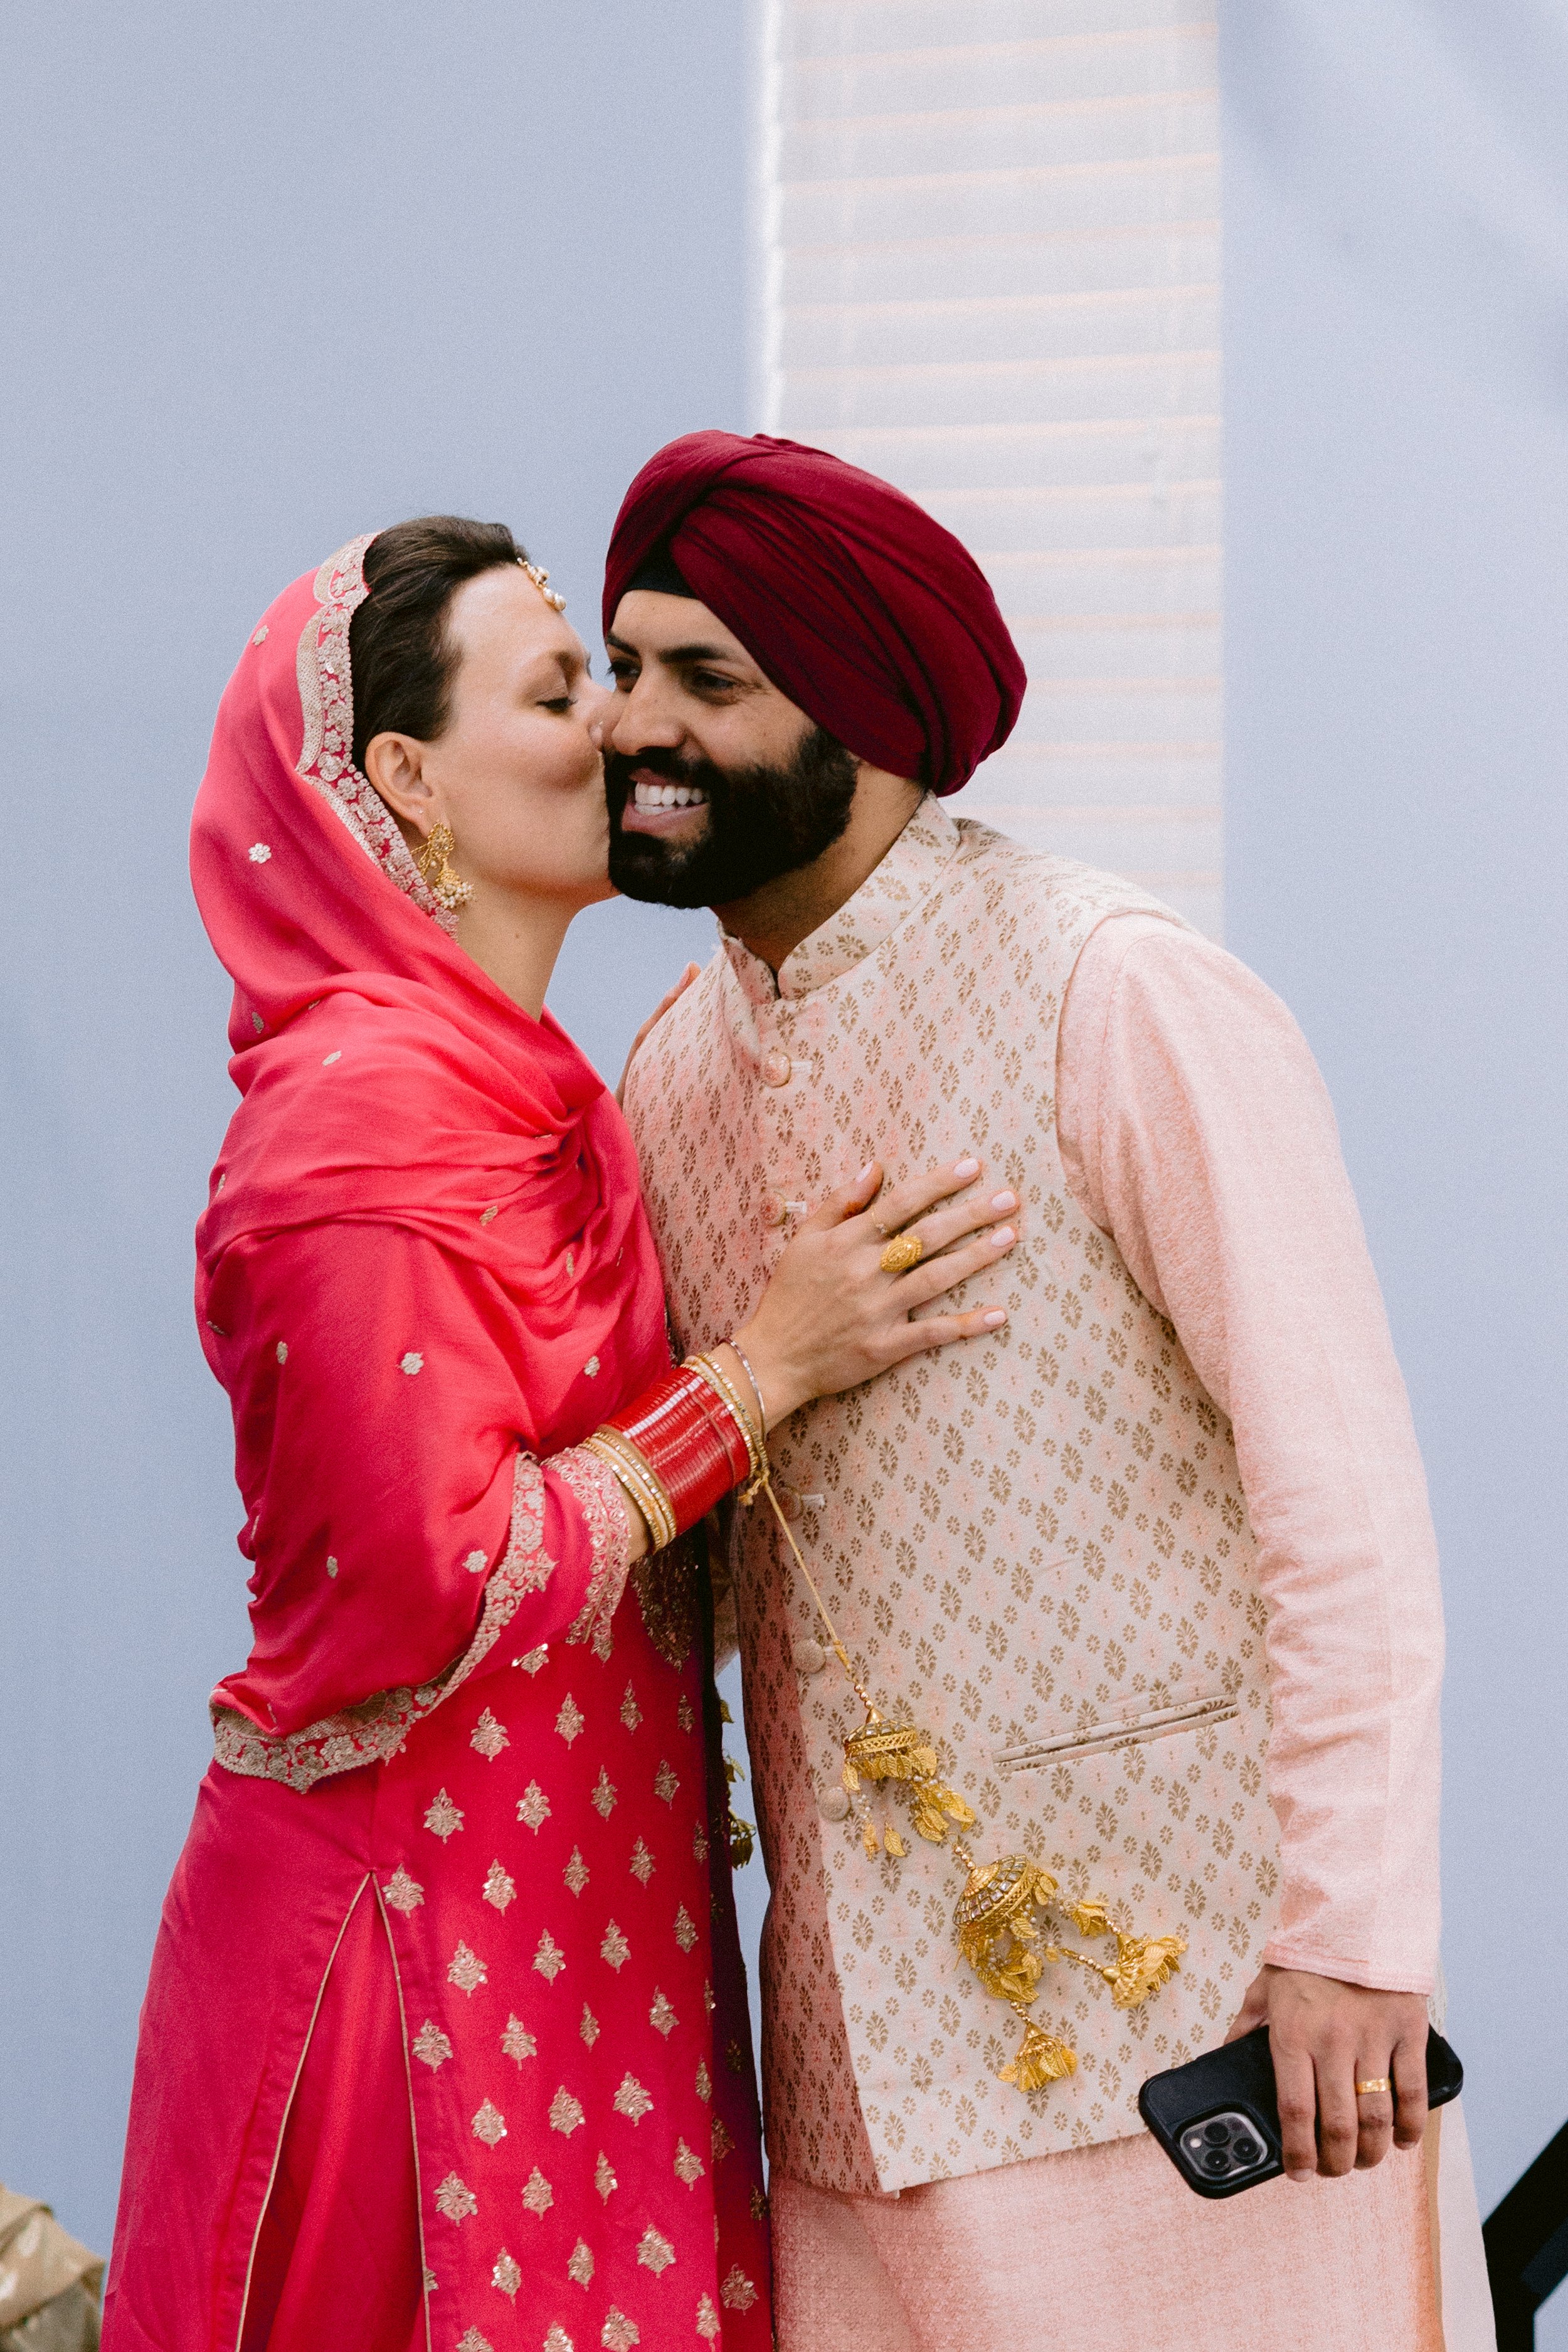 Punjabi Couple | Indian wedding poses, Indian wedding photography couples,  Indian wedding photography poses